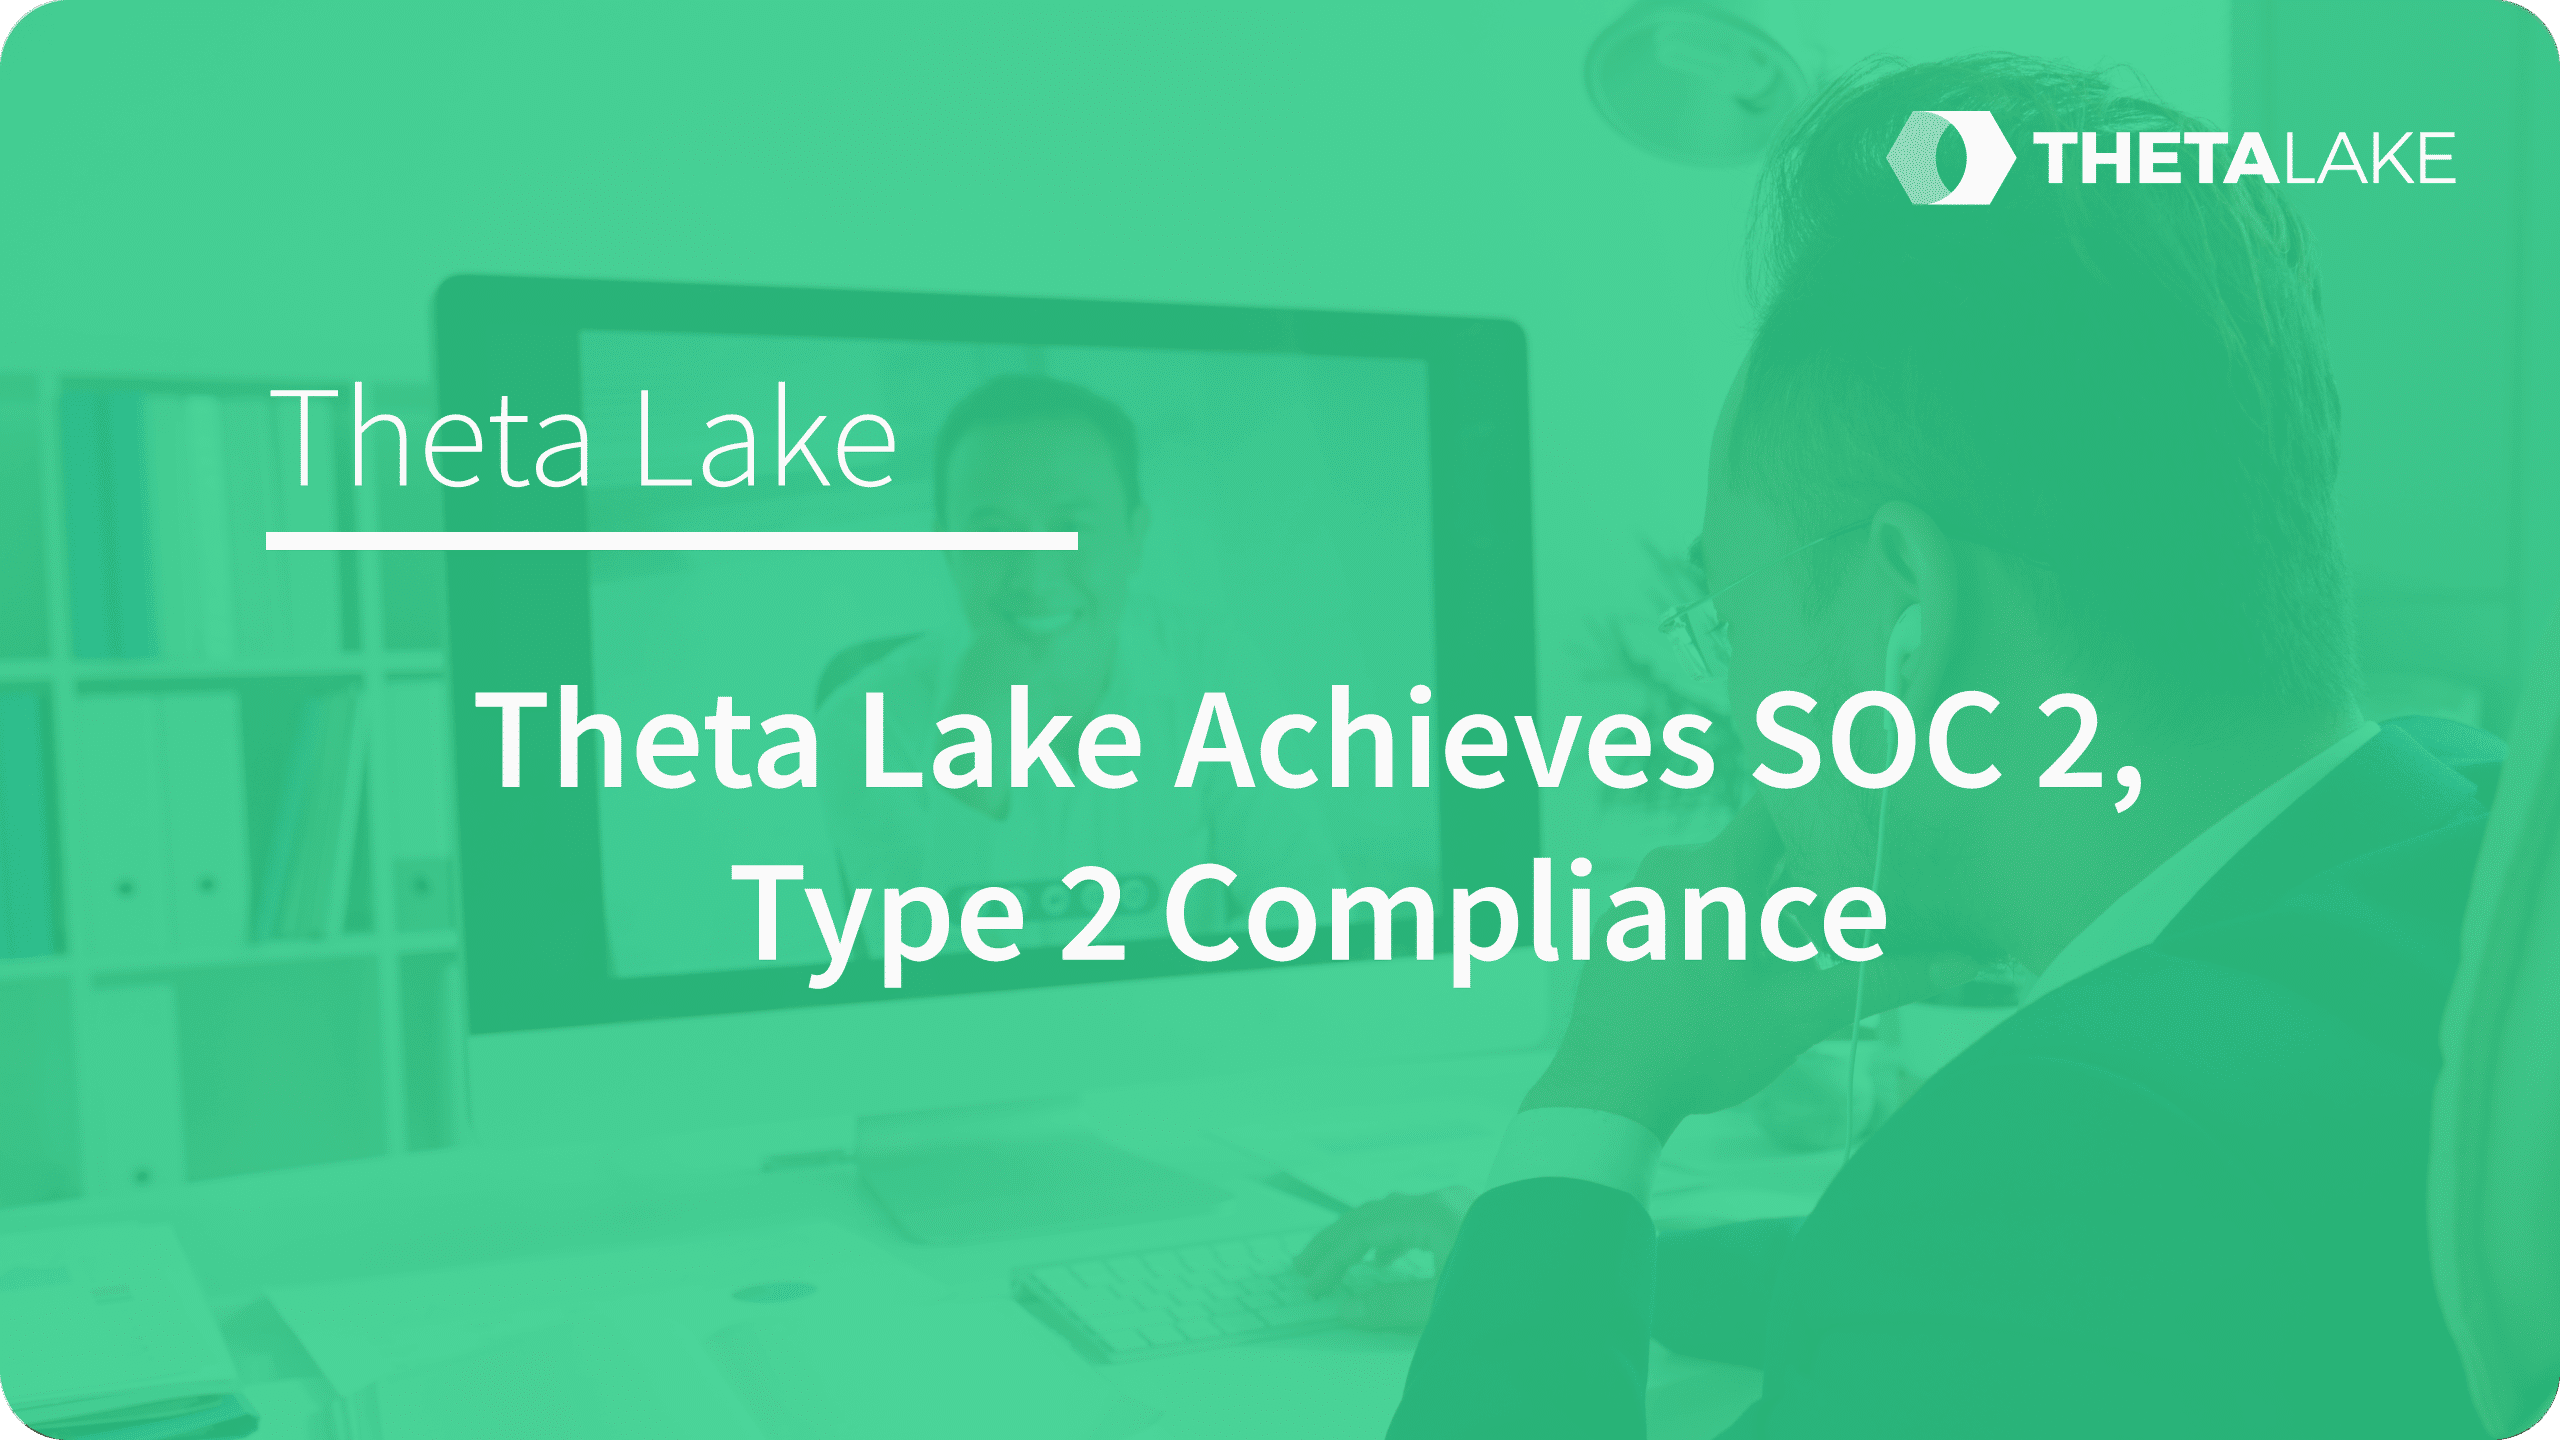 Theta Lake achieves SOC 2, Type 2 compliance